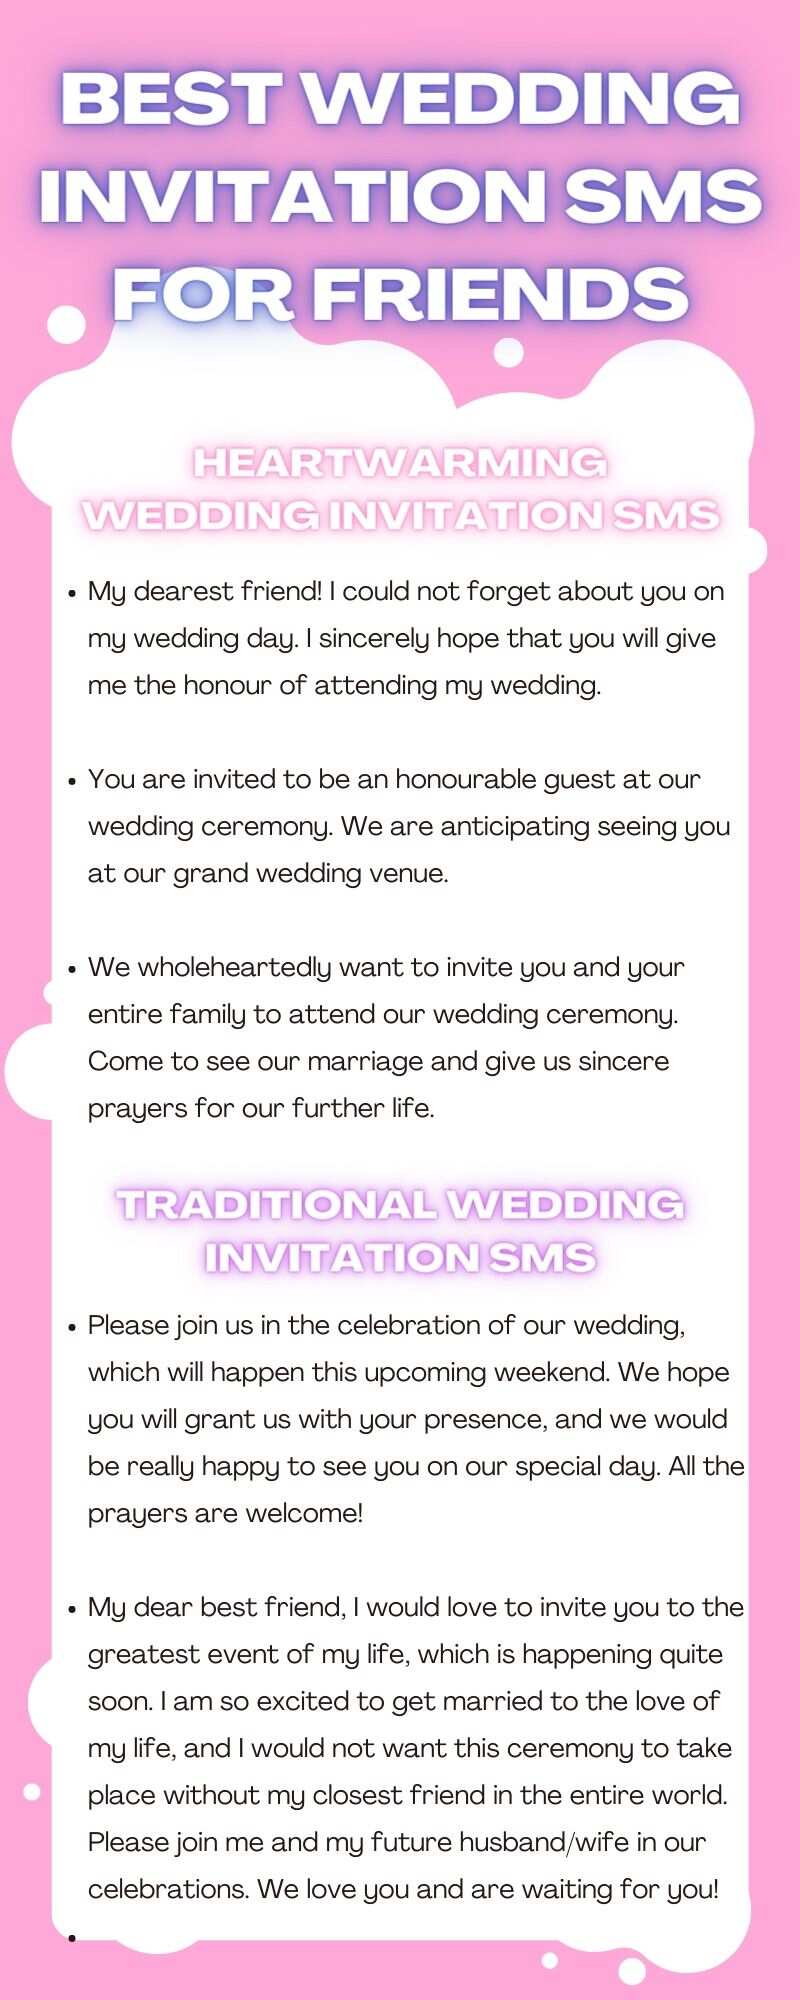 Best wedding invitation